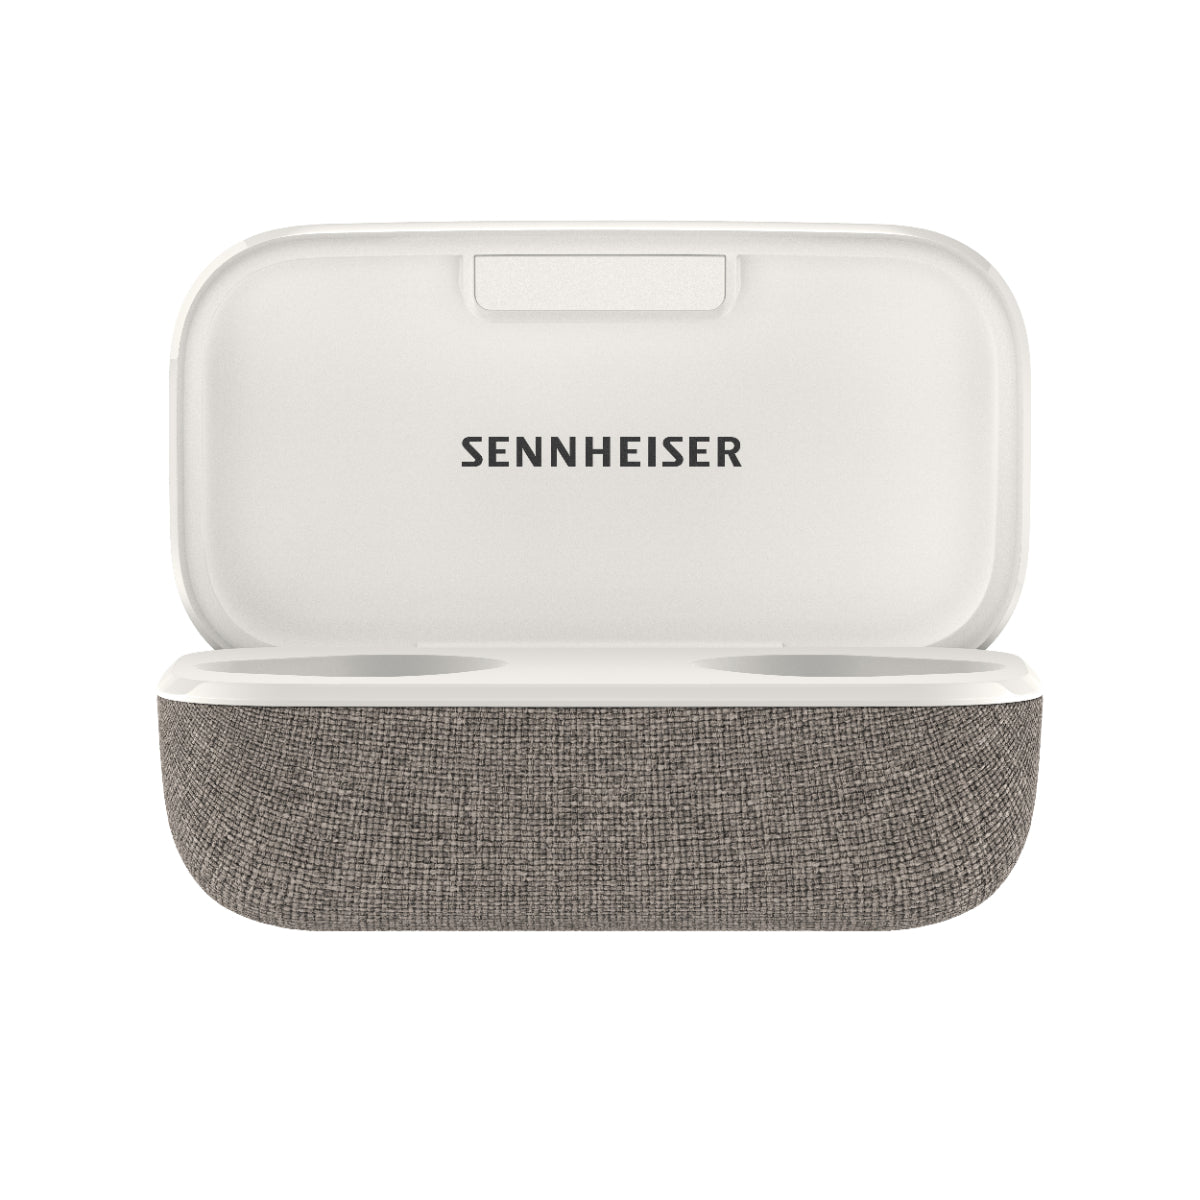 Sennheiser M3IETW2 White, MOMENTUM True Wireless 2, Bluetooth Stereo Earphones, Charging Case, White